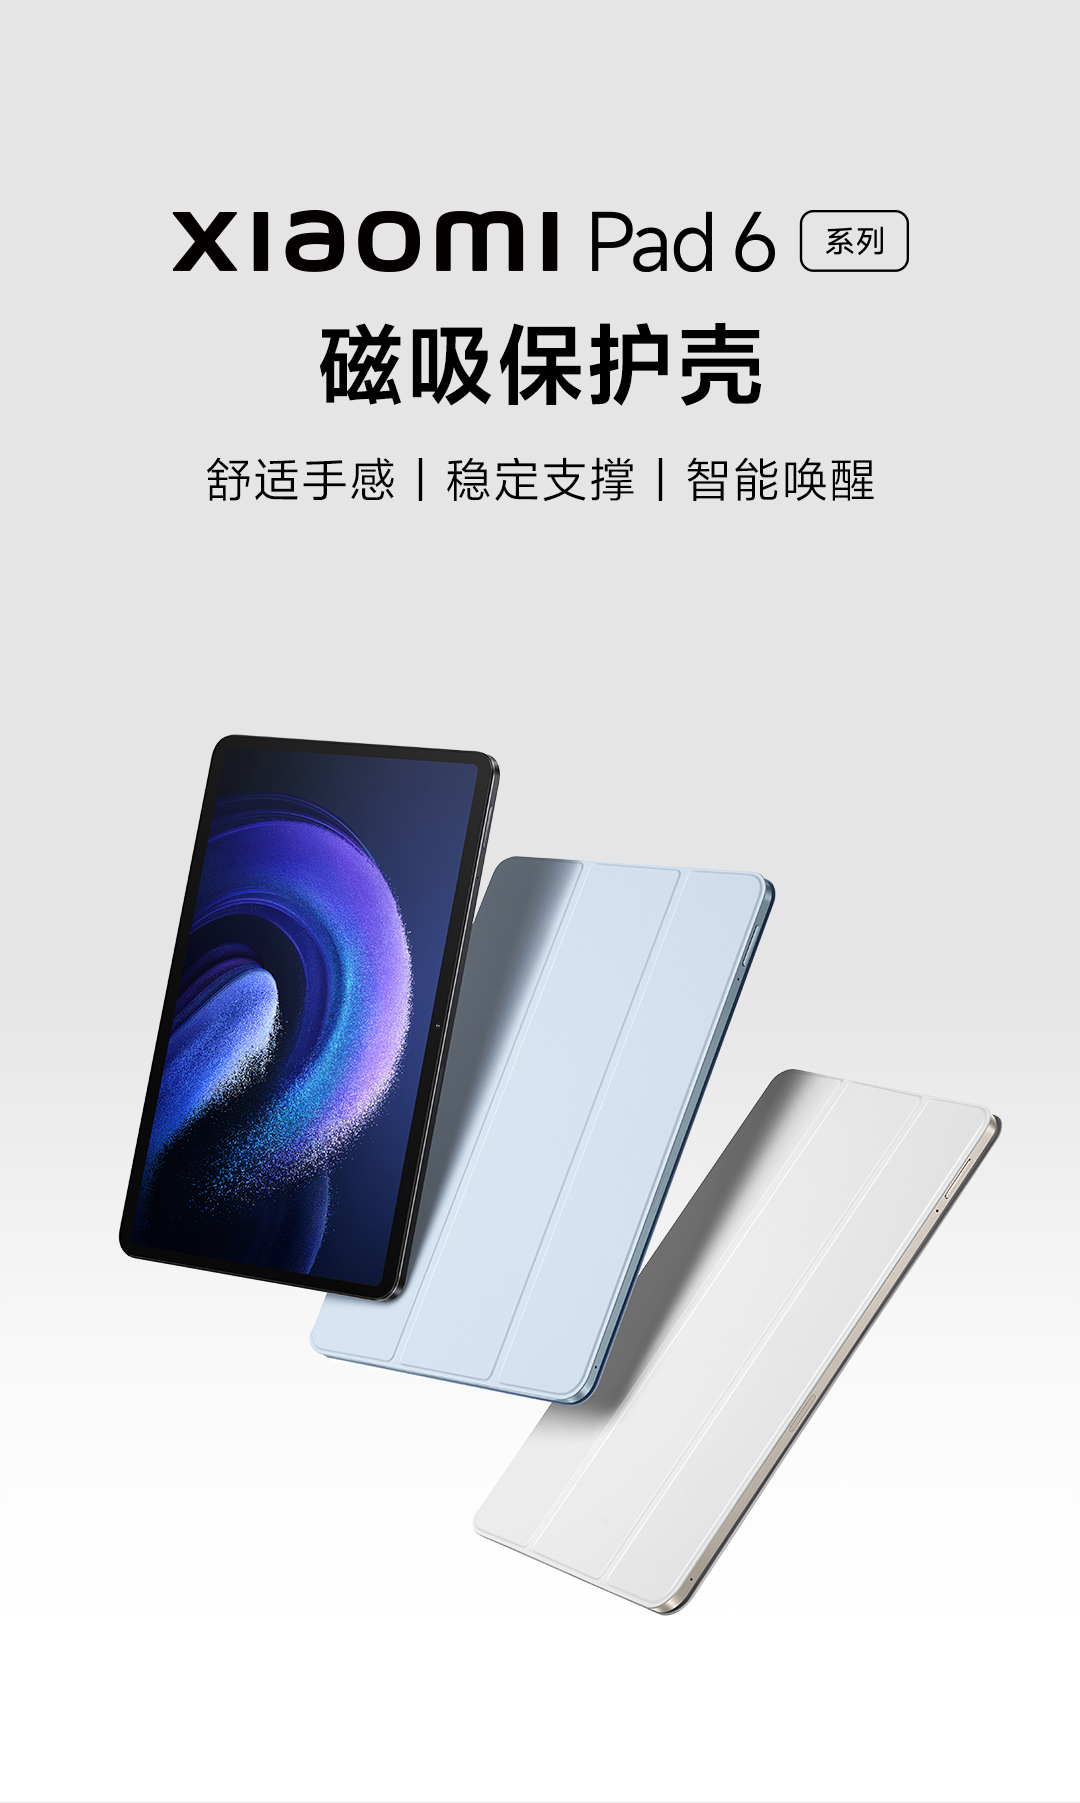 Protector Case Funda Magnetic Folio Stand Cover Xiaomi Mi PAD 6 CASE